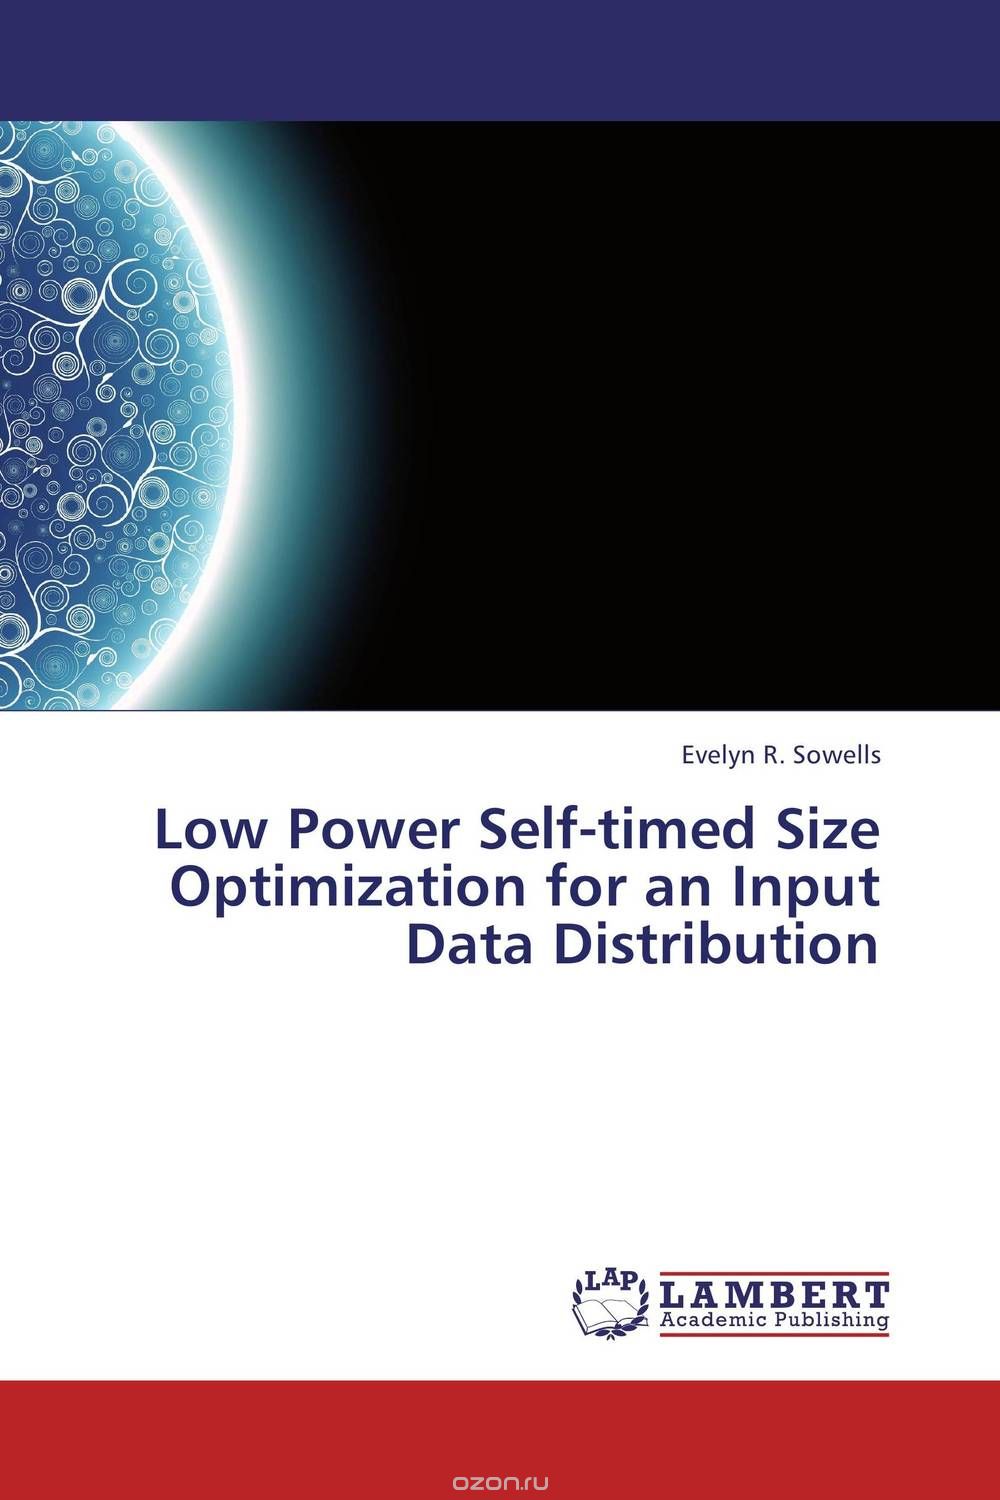 Скачать книгу "Low Power Self-timed Size Optimization for an Input Data Distribution"